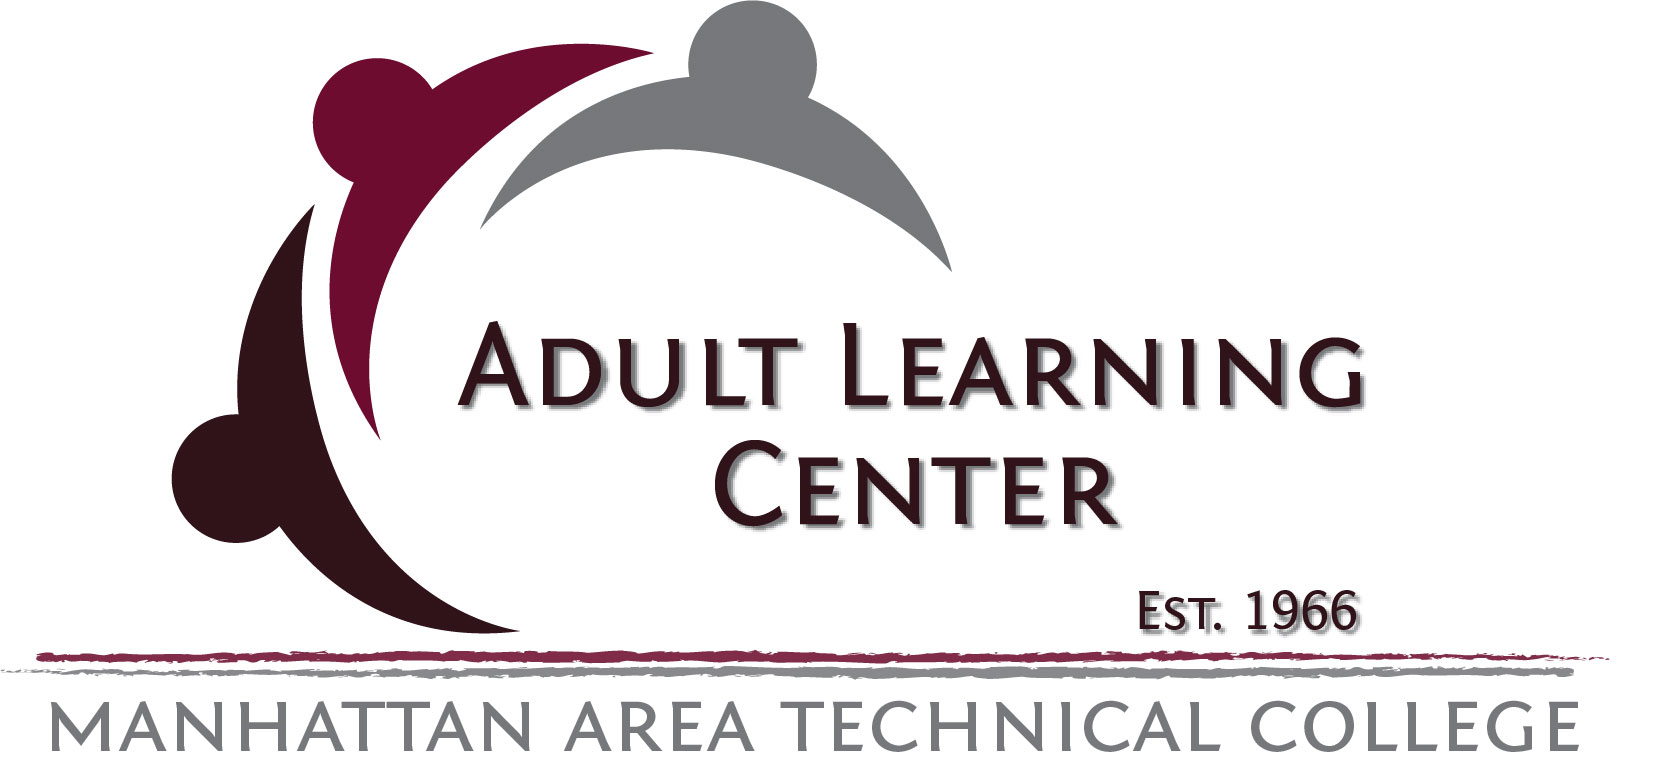 Manhattan Adult Learning Center logo